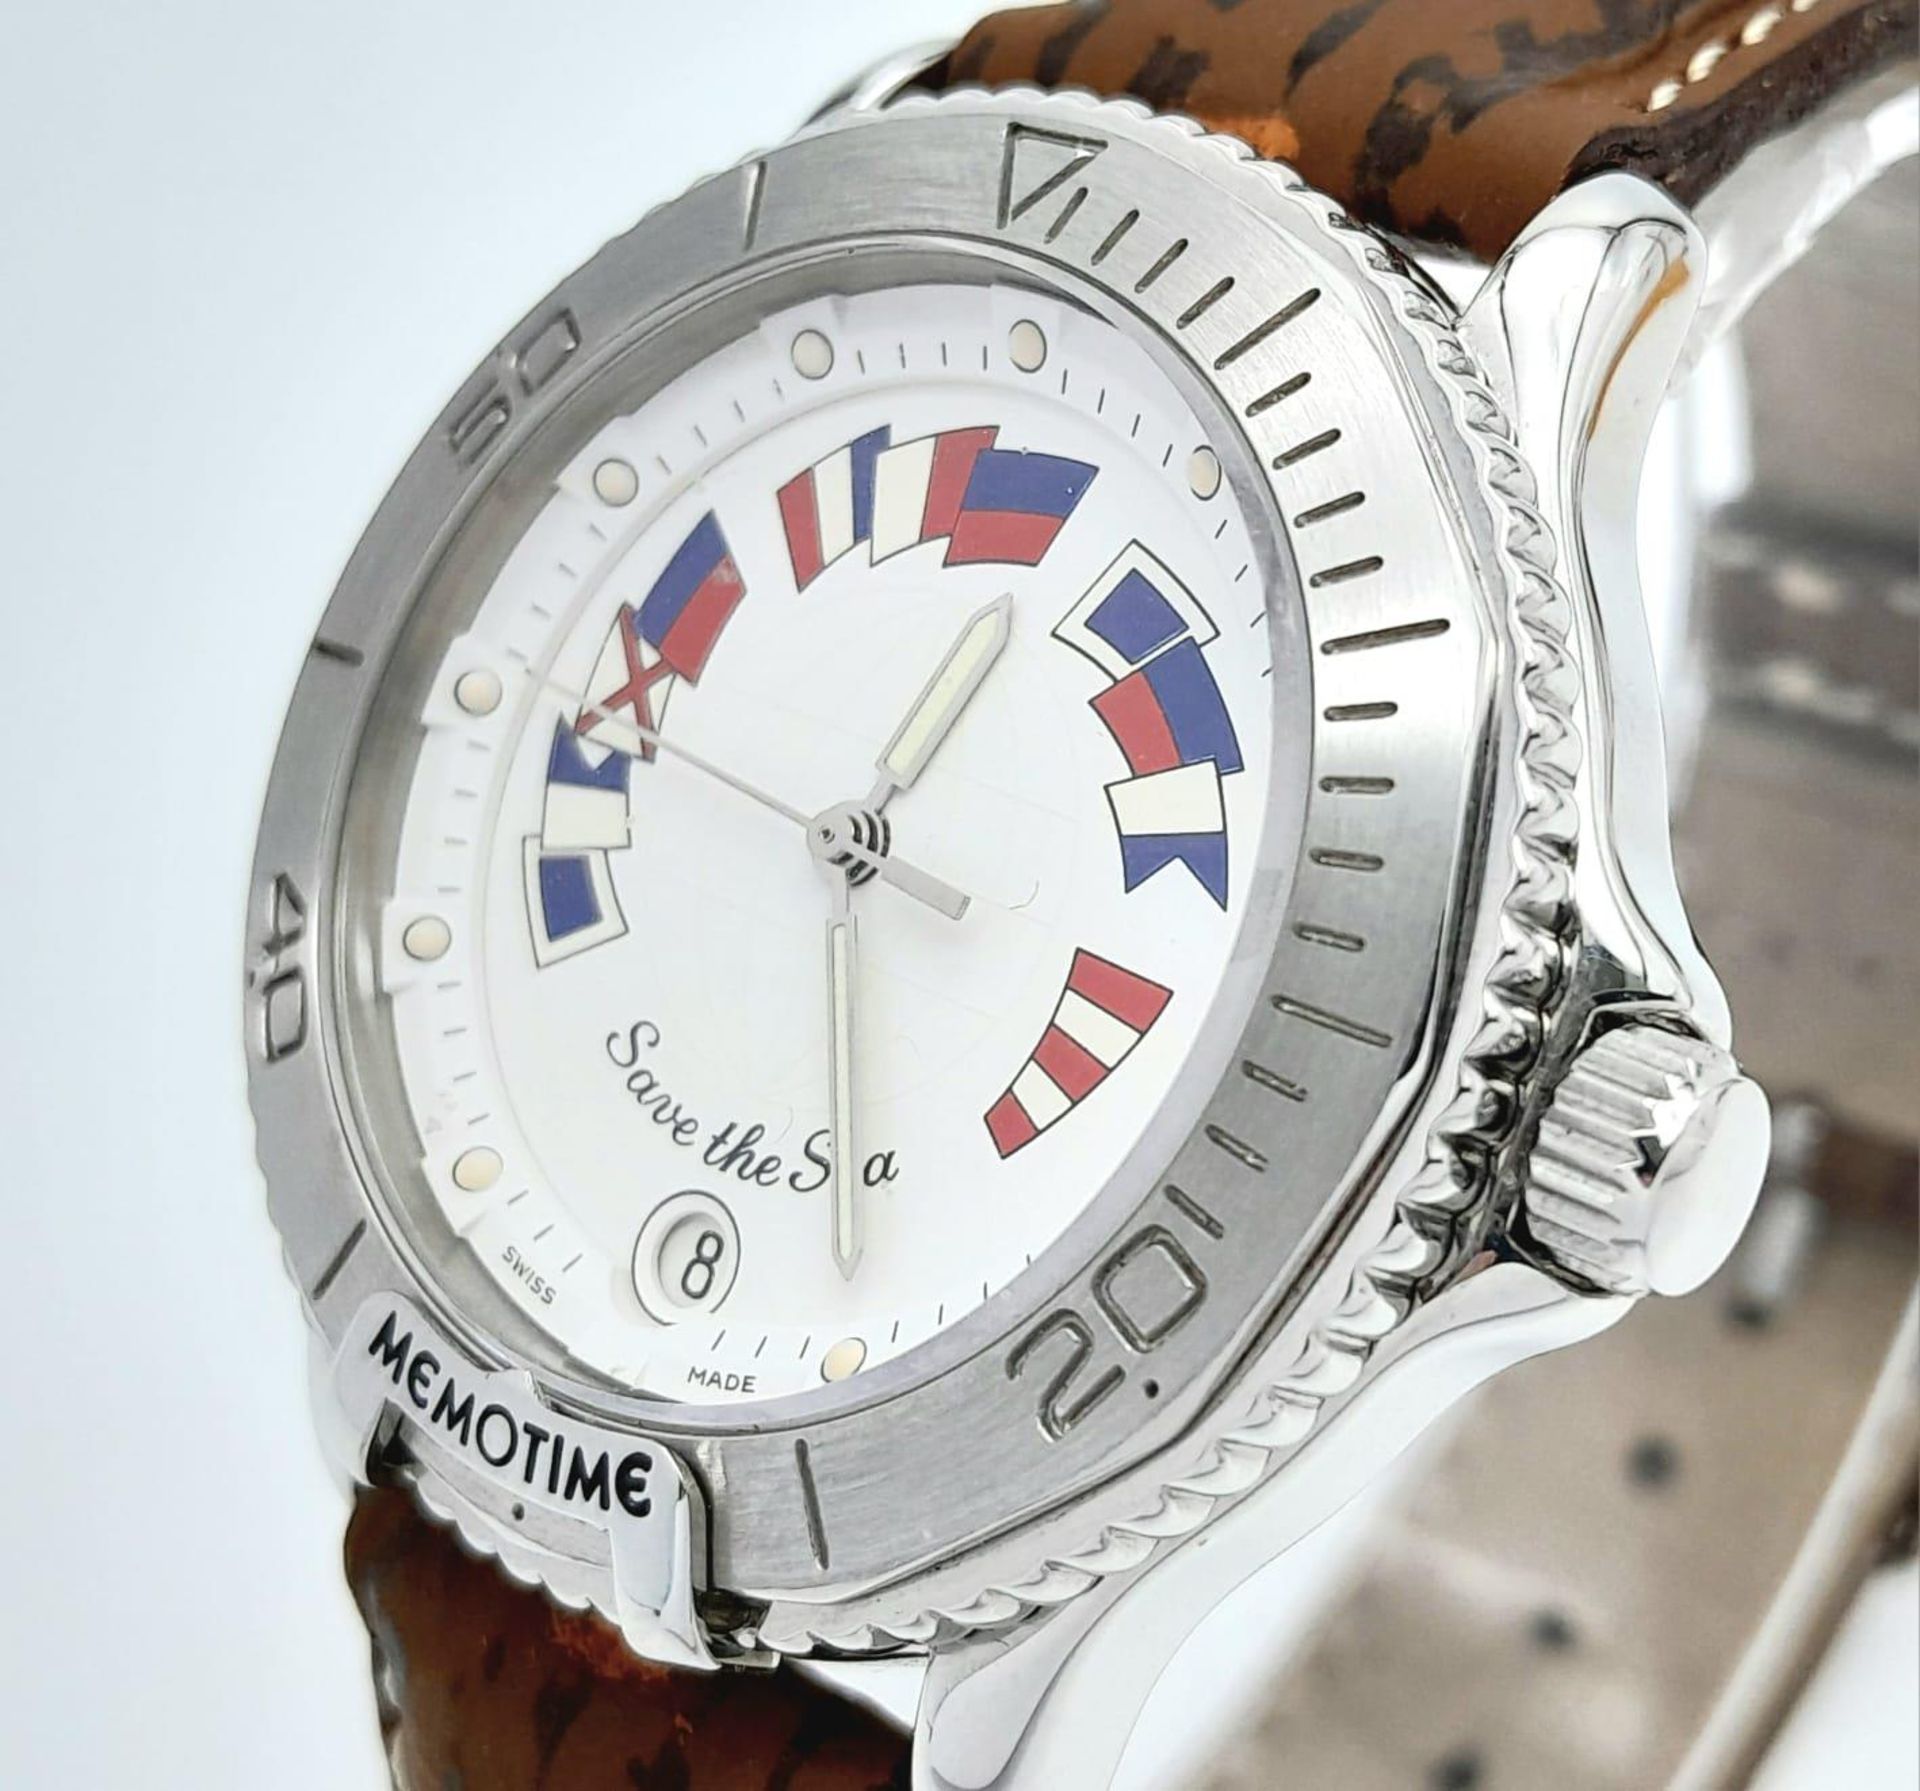 A Corum Memotime - Save the Sea Limited Edition Quartz Unisex Watch. Brown leather strap. - Bild 4 aus 7